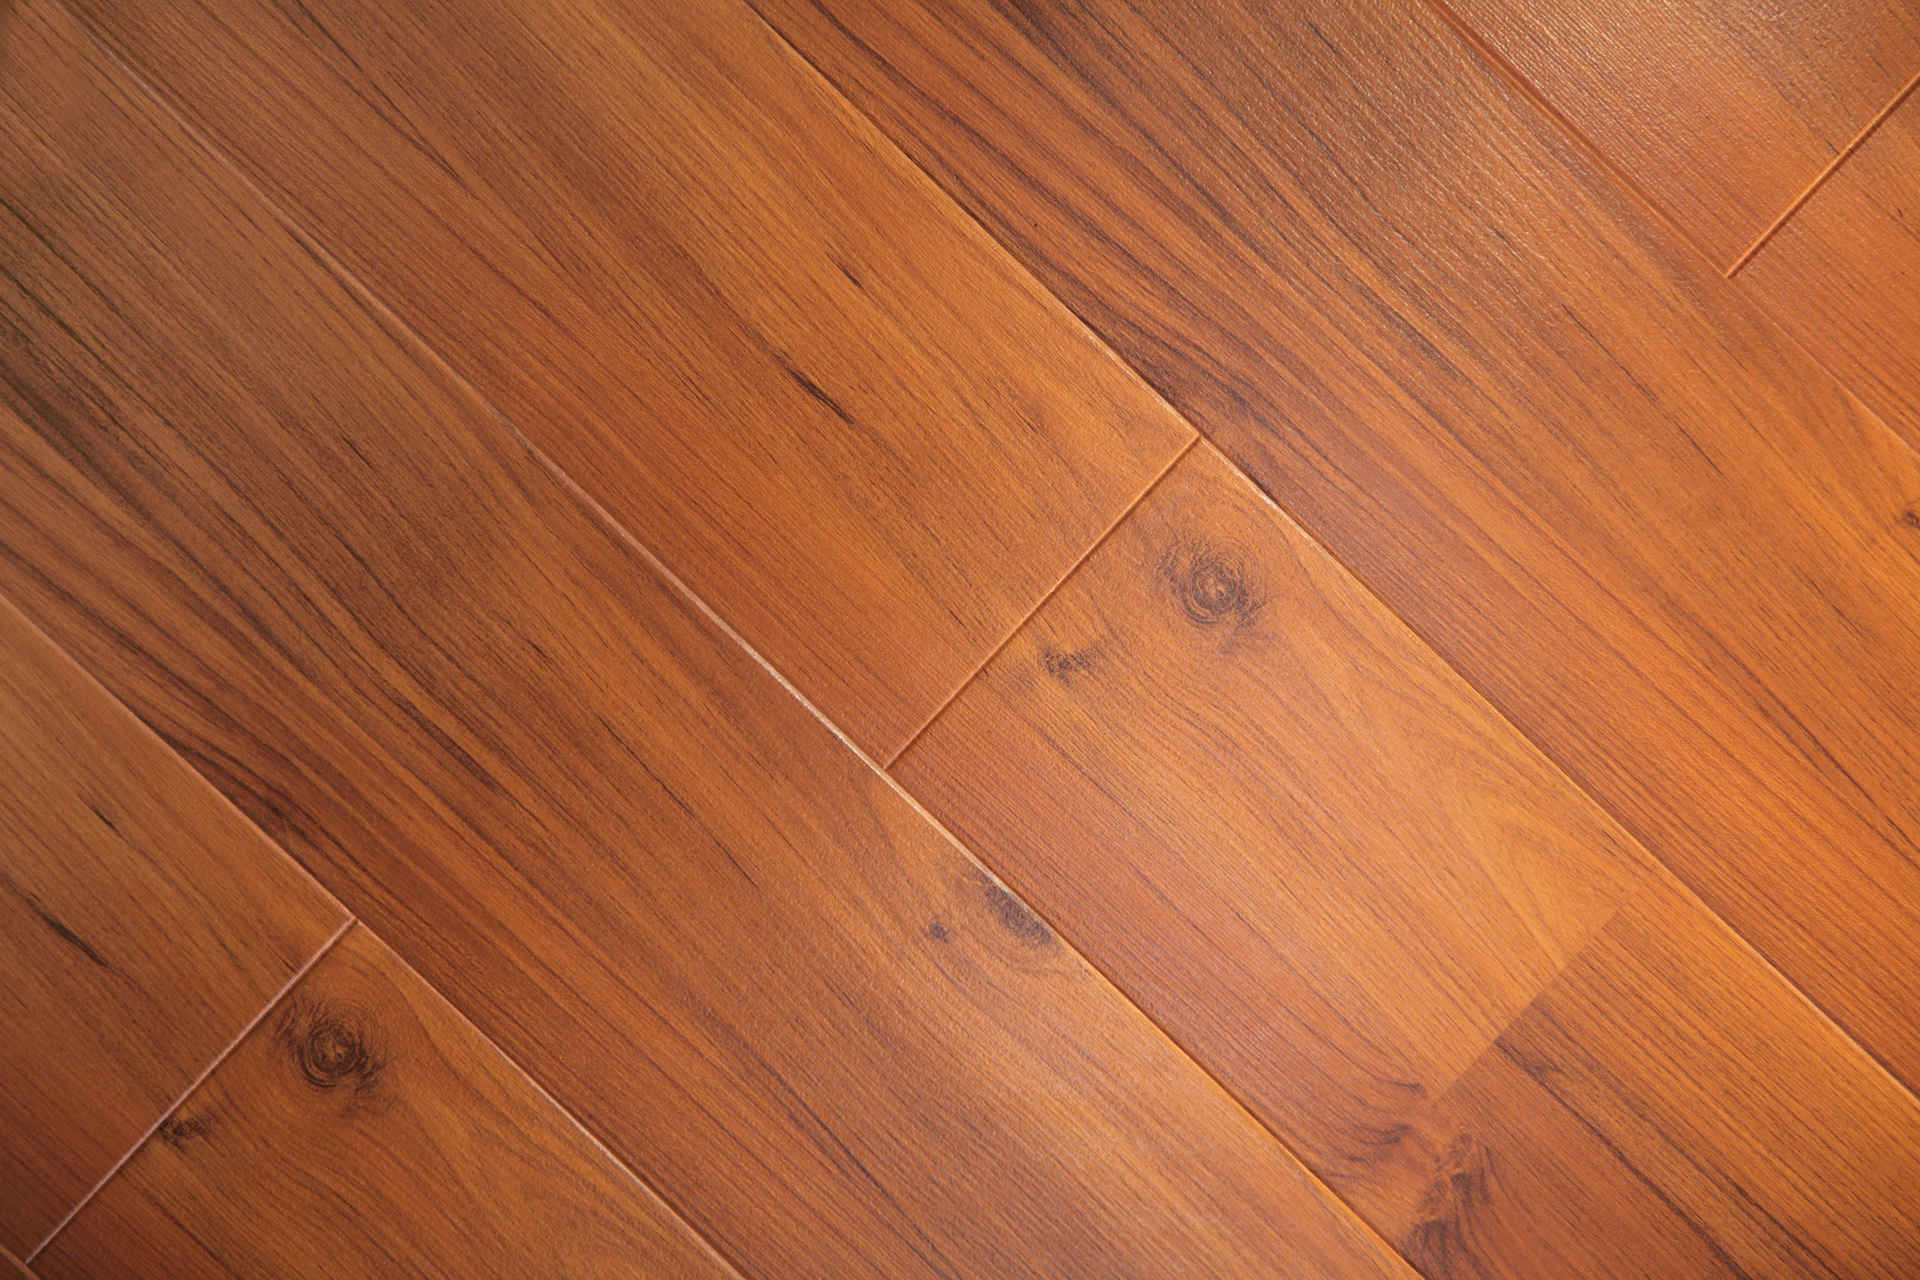 Hardwood Floor, Minimize Disruption